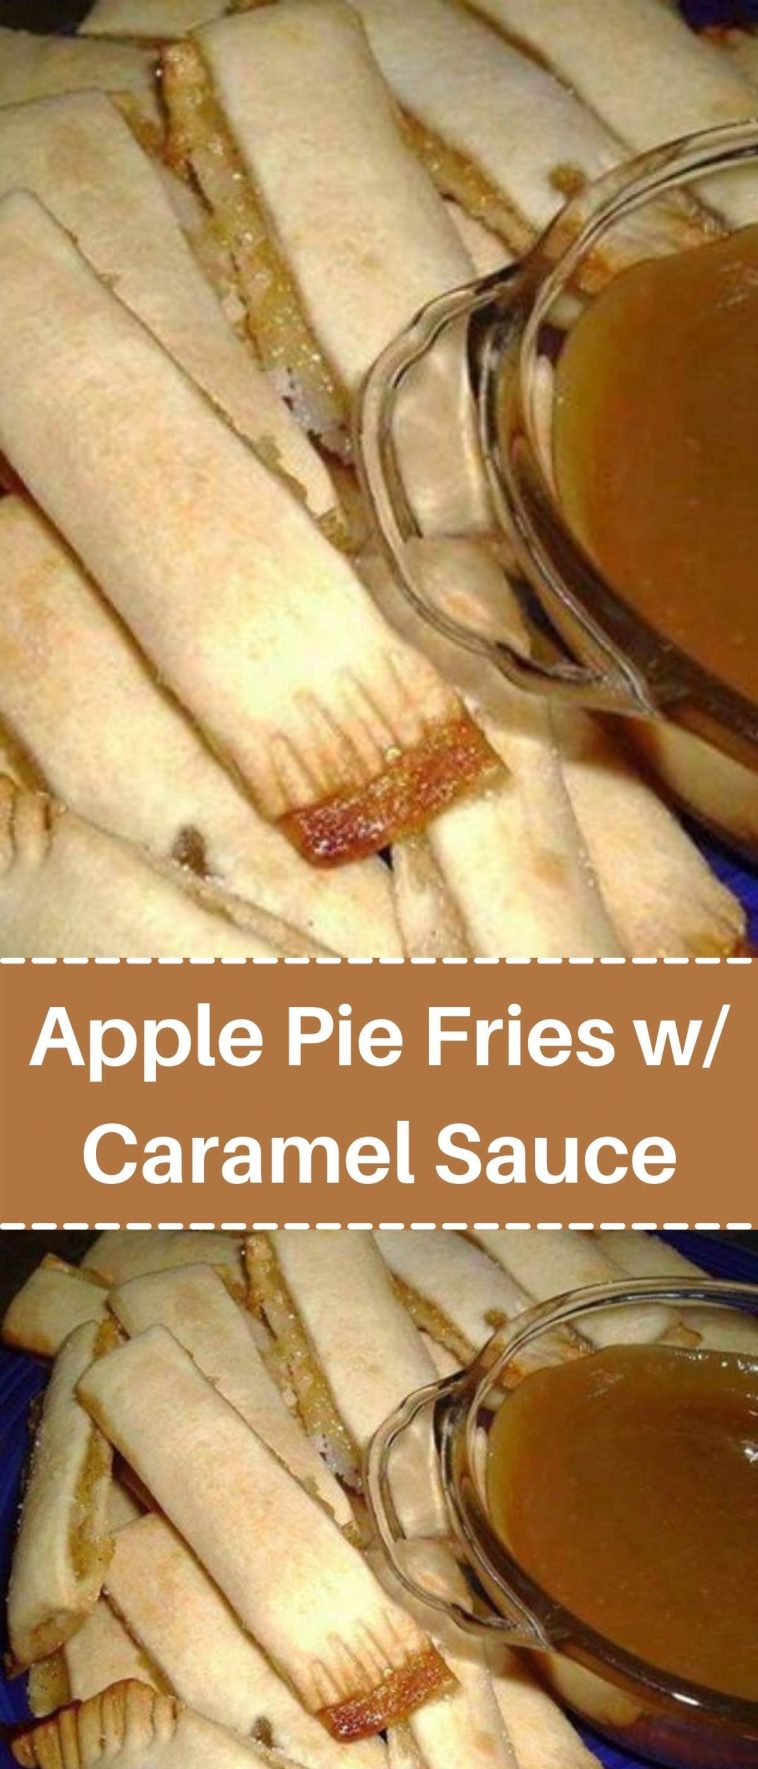 Apple Pie Fries w/ Caramel Sauce